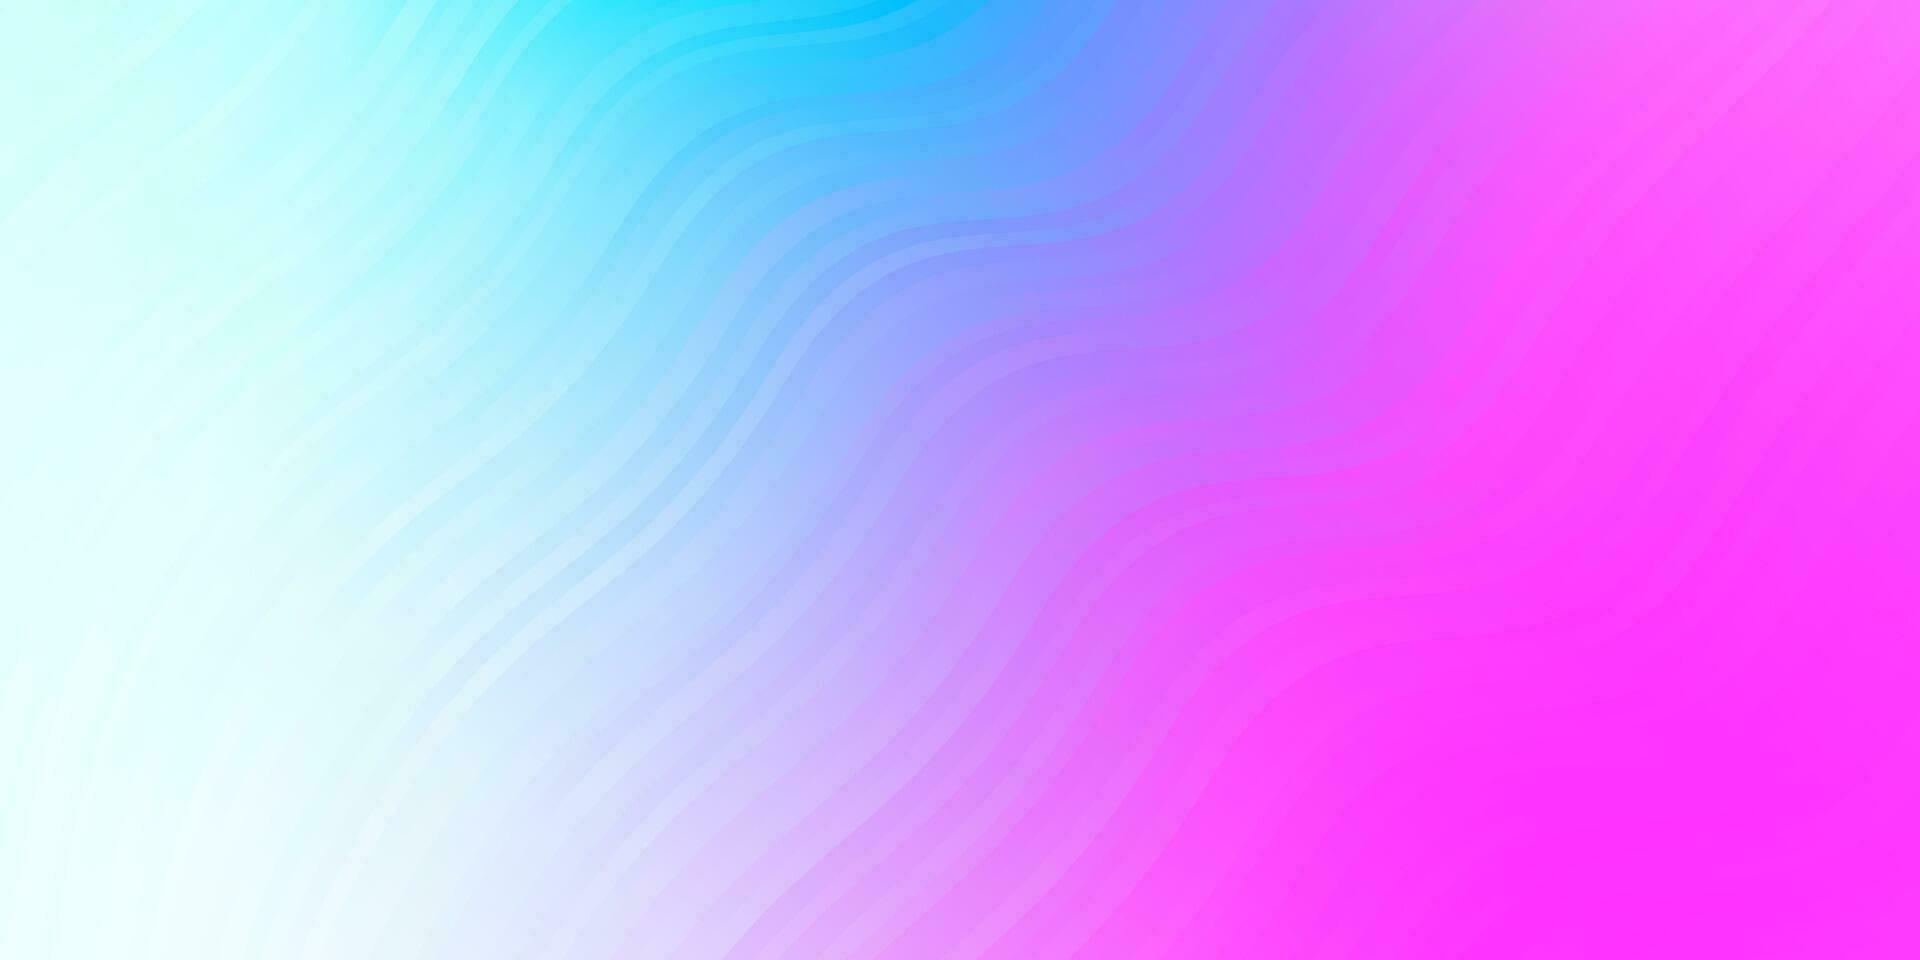 plantilla de vector rosa claro, azul con curvas.